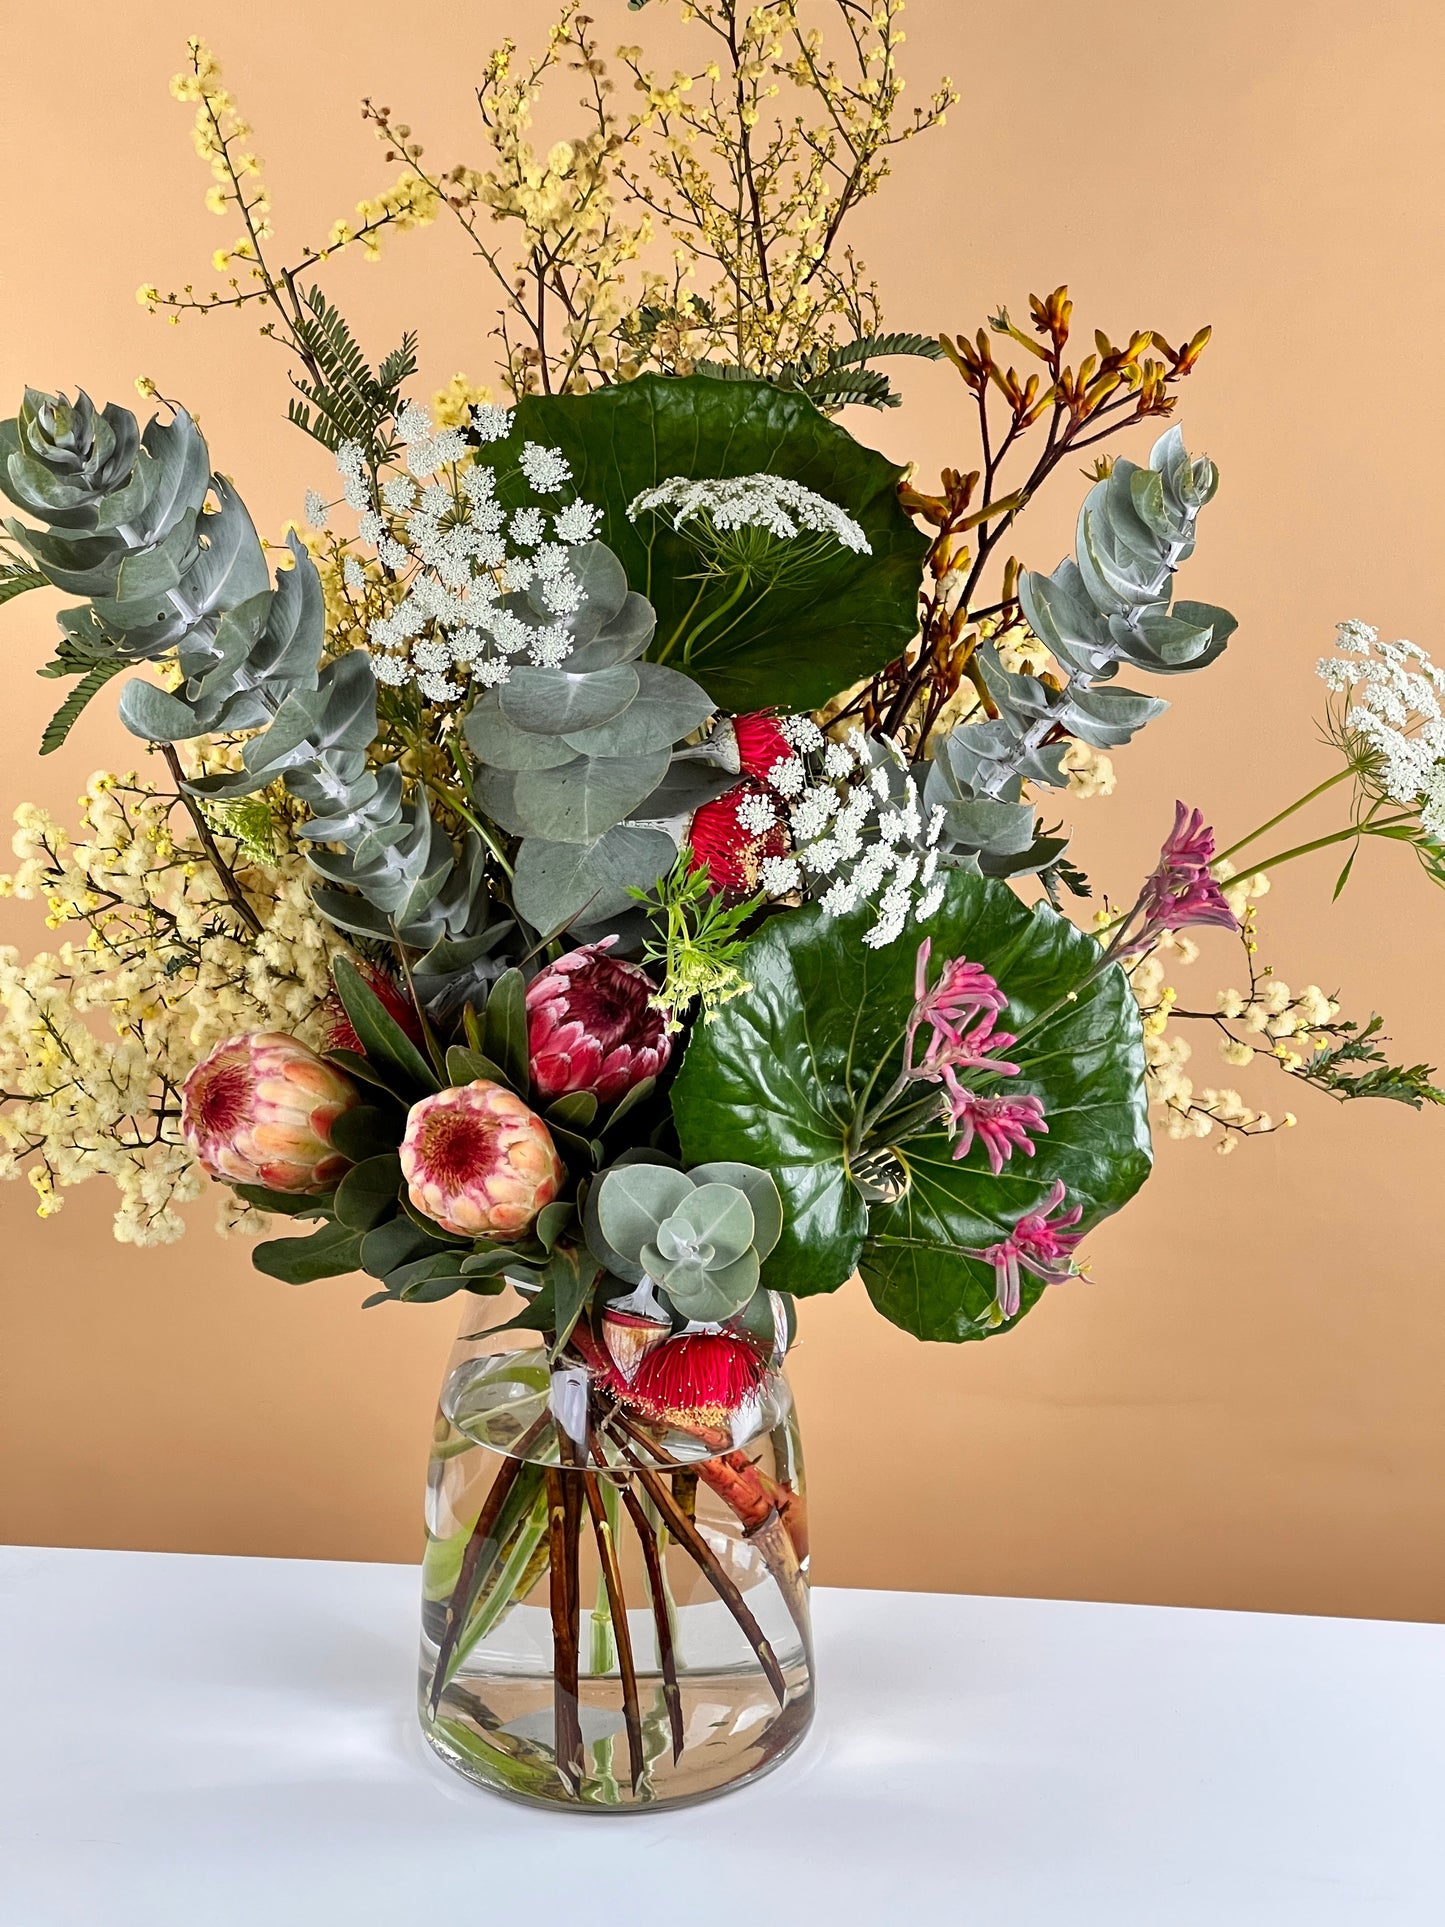 Wild Natives Bunch-Flower-Delivery-Gold-Coast-Florist-Flowers Gold Coast-Gorgeous Glass Vase-Breathtaking-https://www.flowersgoldcoast.com.au-best-florist